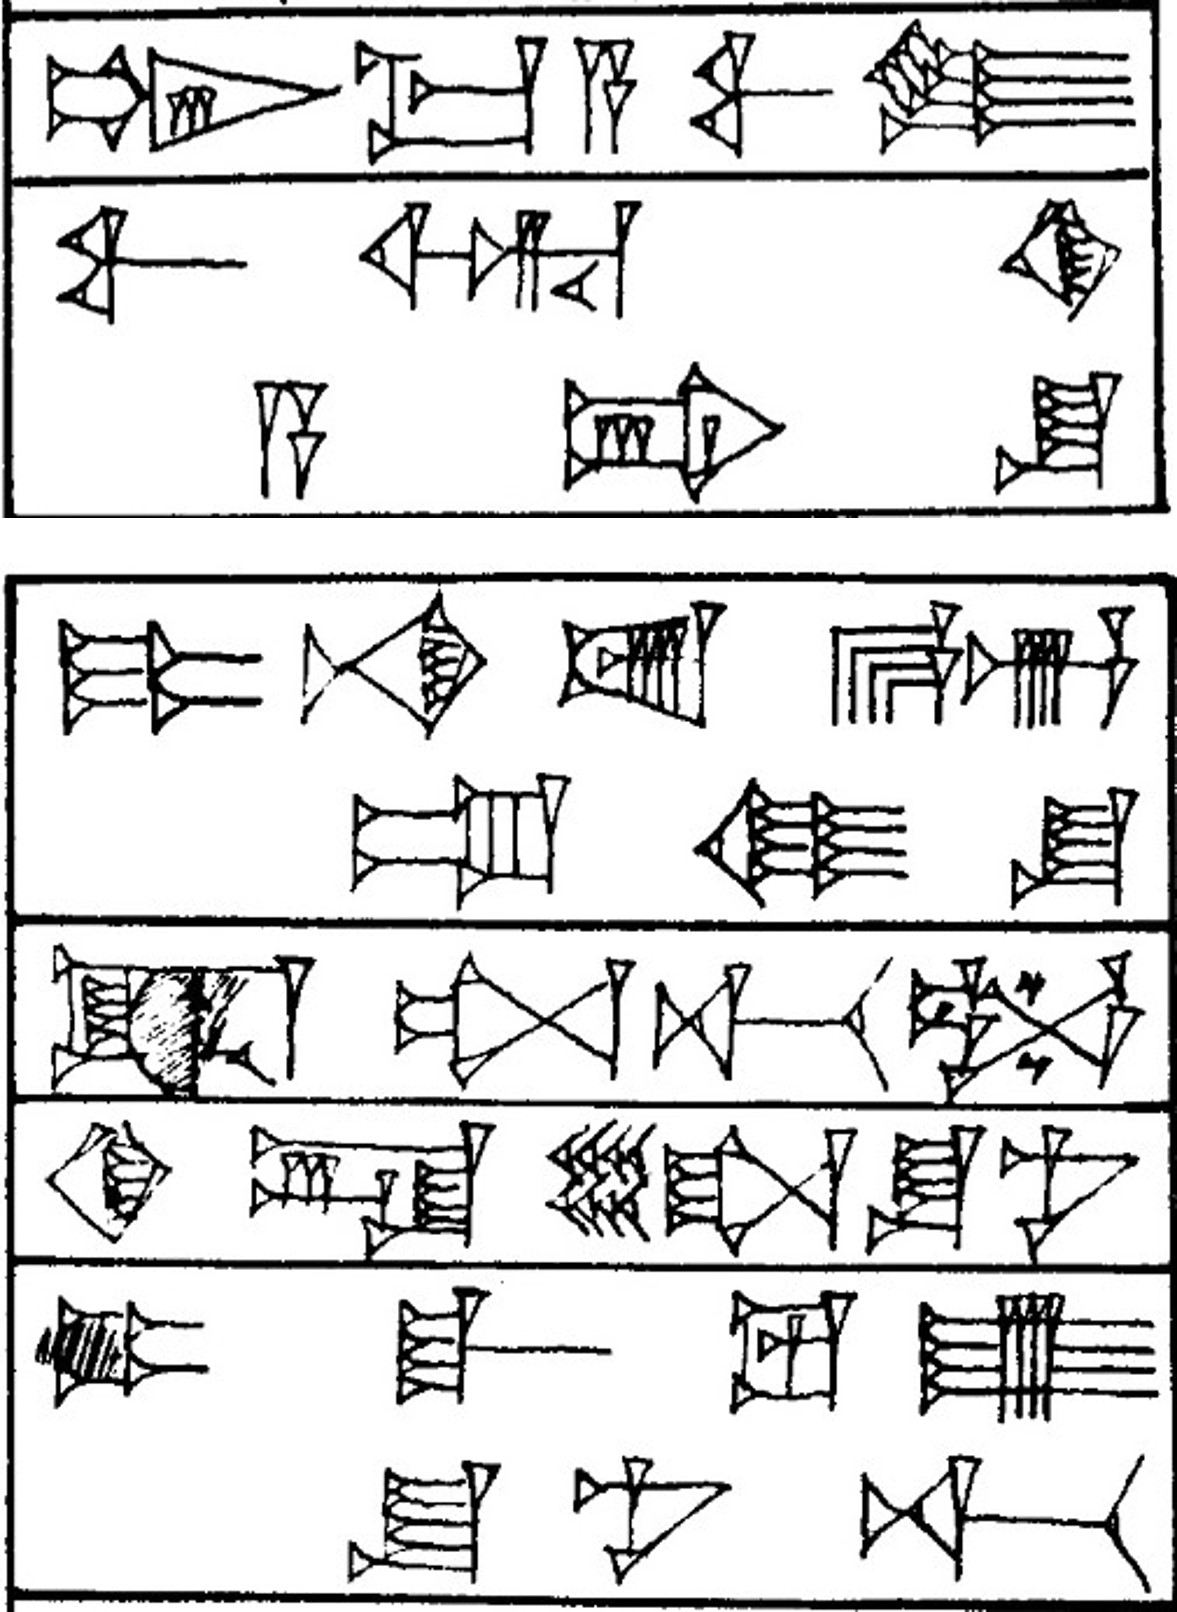 Law § 157 - Cuneiform - Law Code of Hammurabi